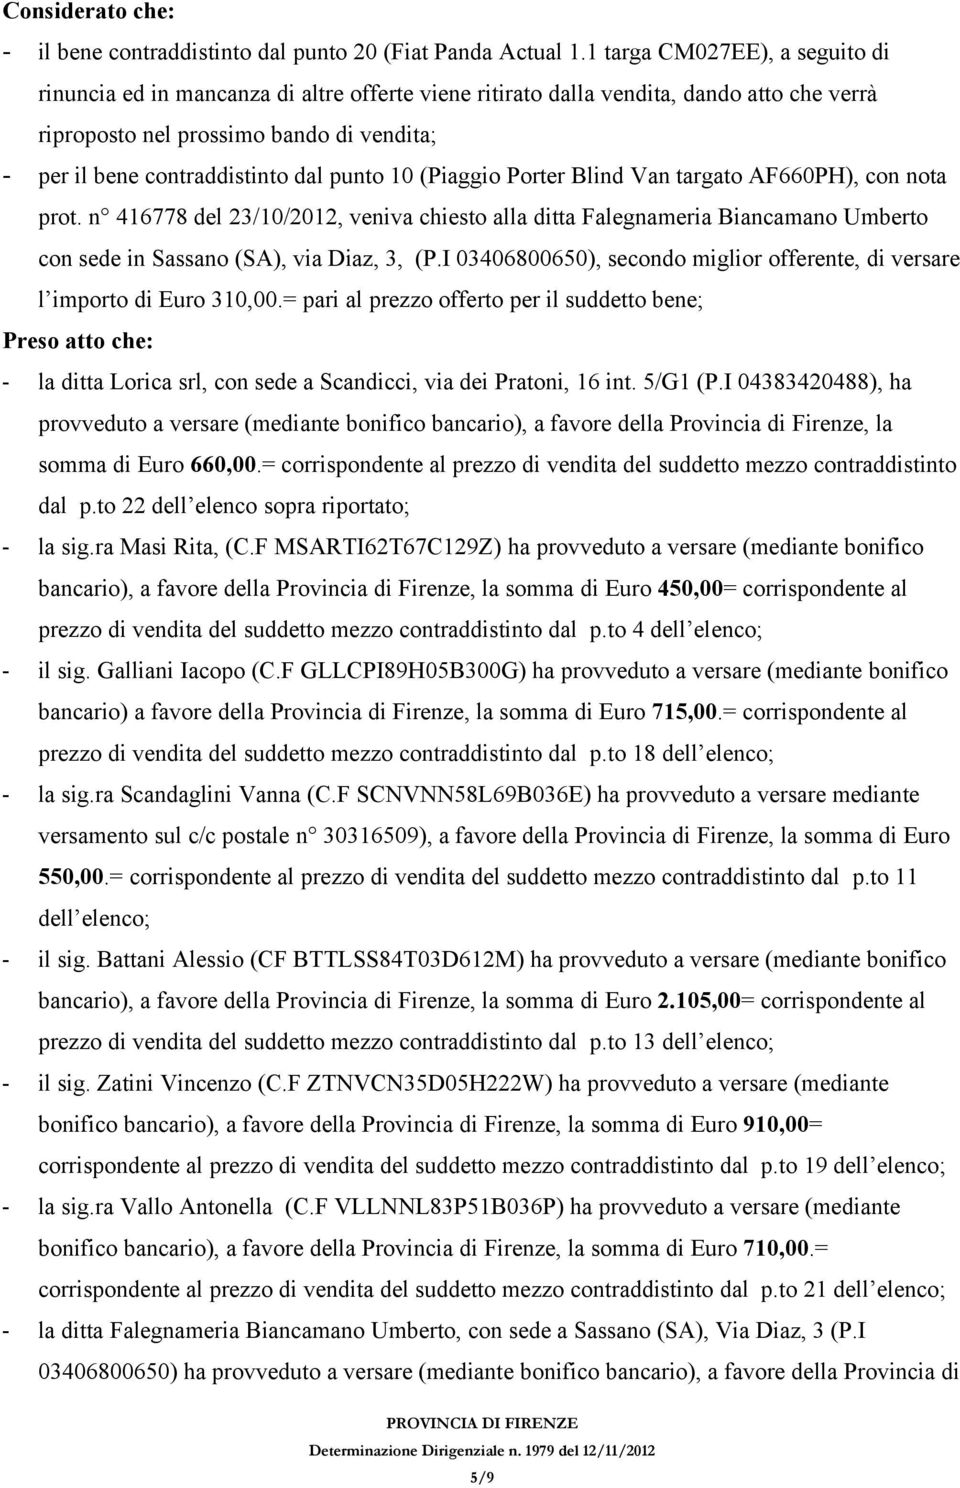 punto 10 (Piaggio Porter Blind Van targato AF660PH), con nota prot. n 416778 del 23/10/2012, veniva chiesto alla ditta Falegnameria Biancamano Umberto con sede in Sassano (SA), via Diaz, 3, (P.